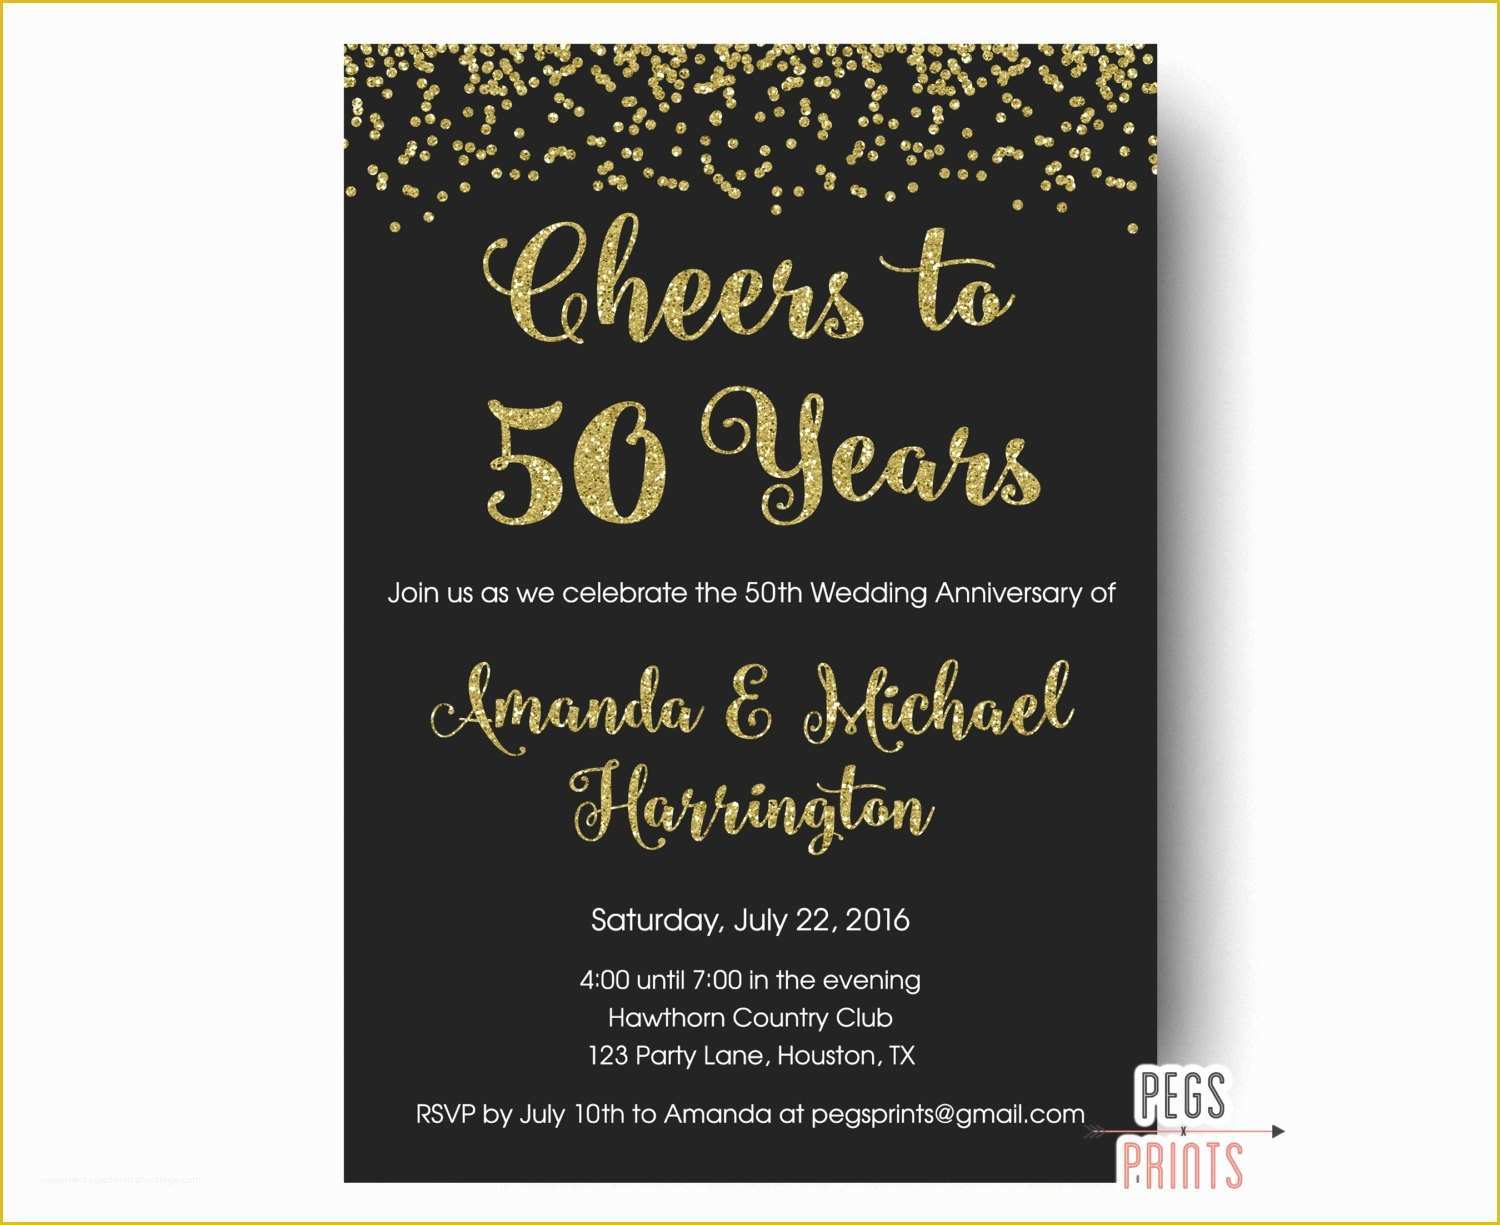 50th Wedding Anniversary Invitations Free Templates Of Cheers to 50 Years Invitation 50th Anniversary Invitation